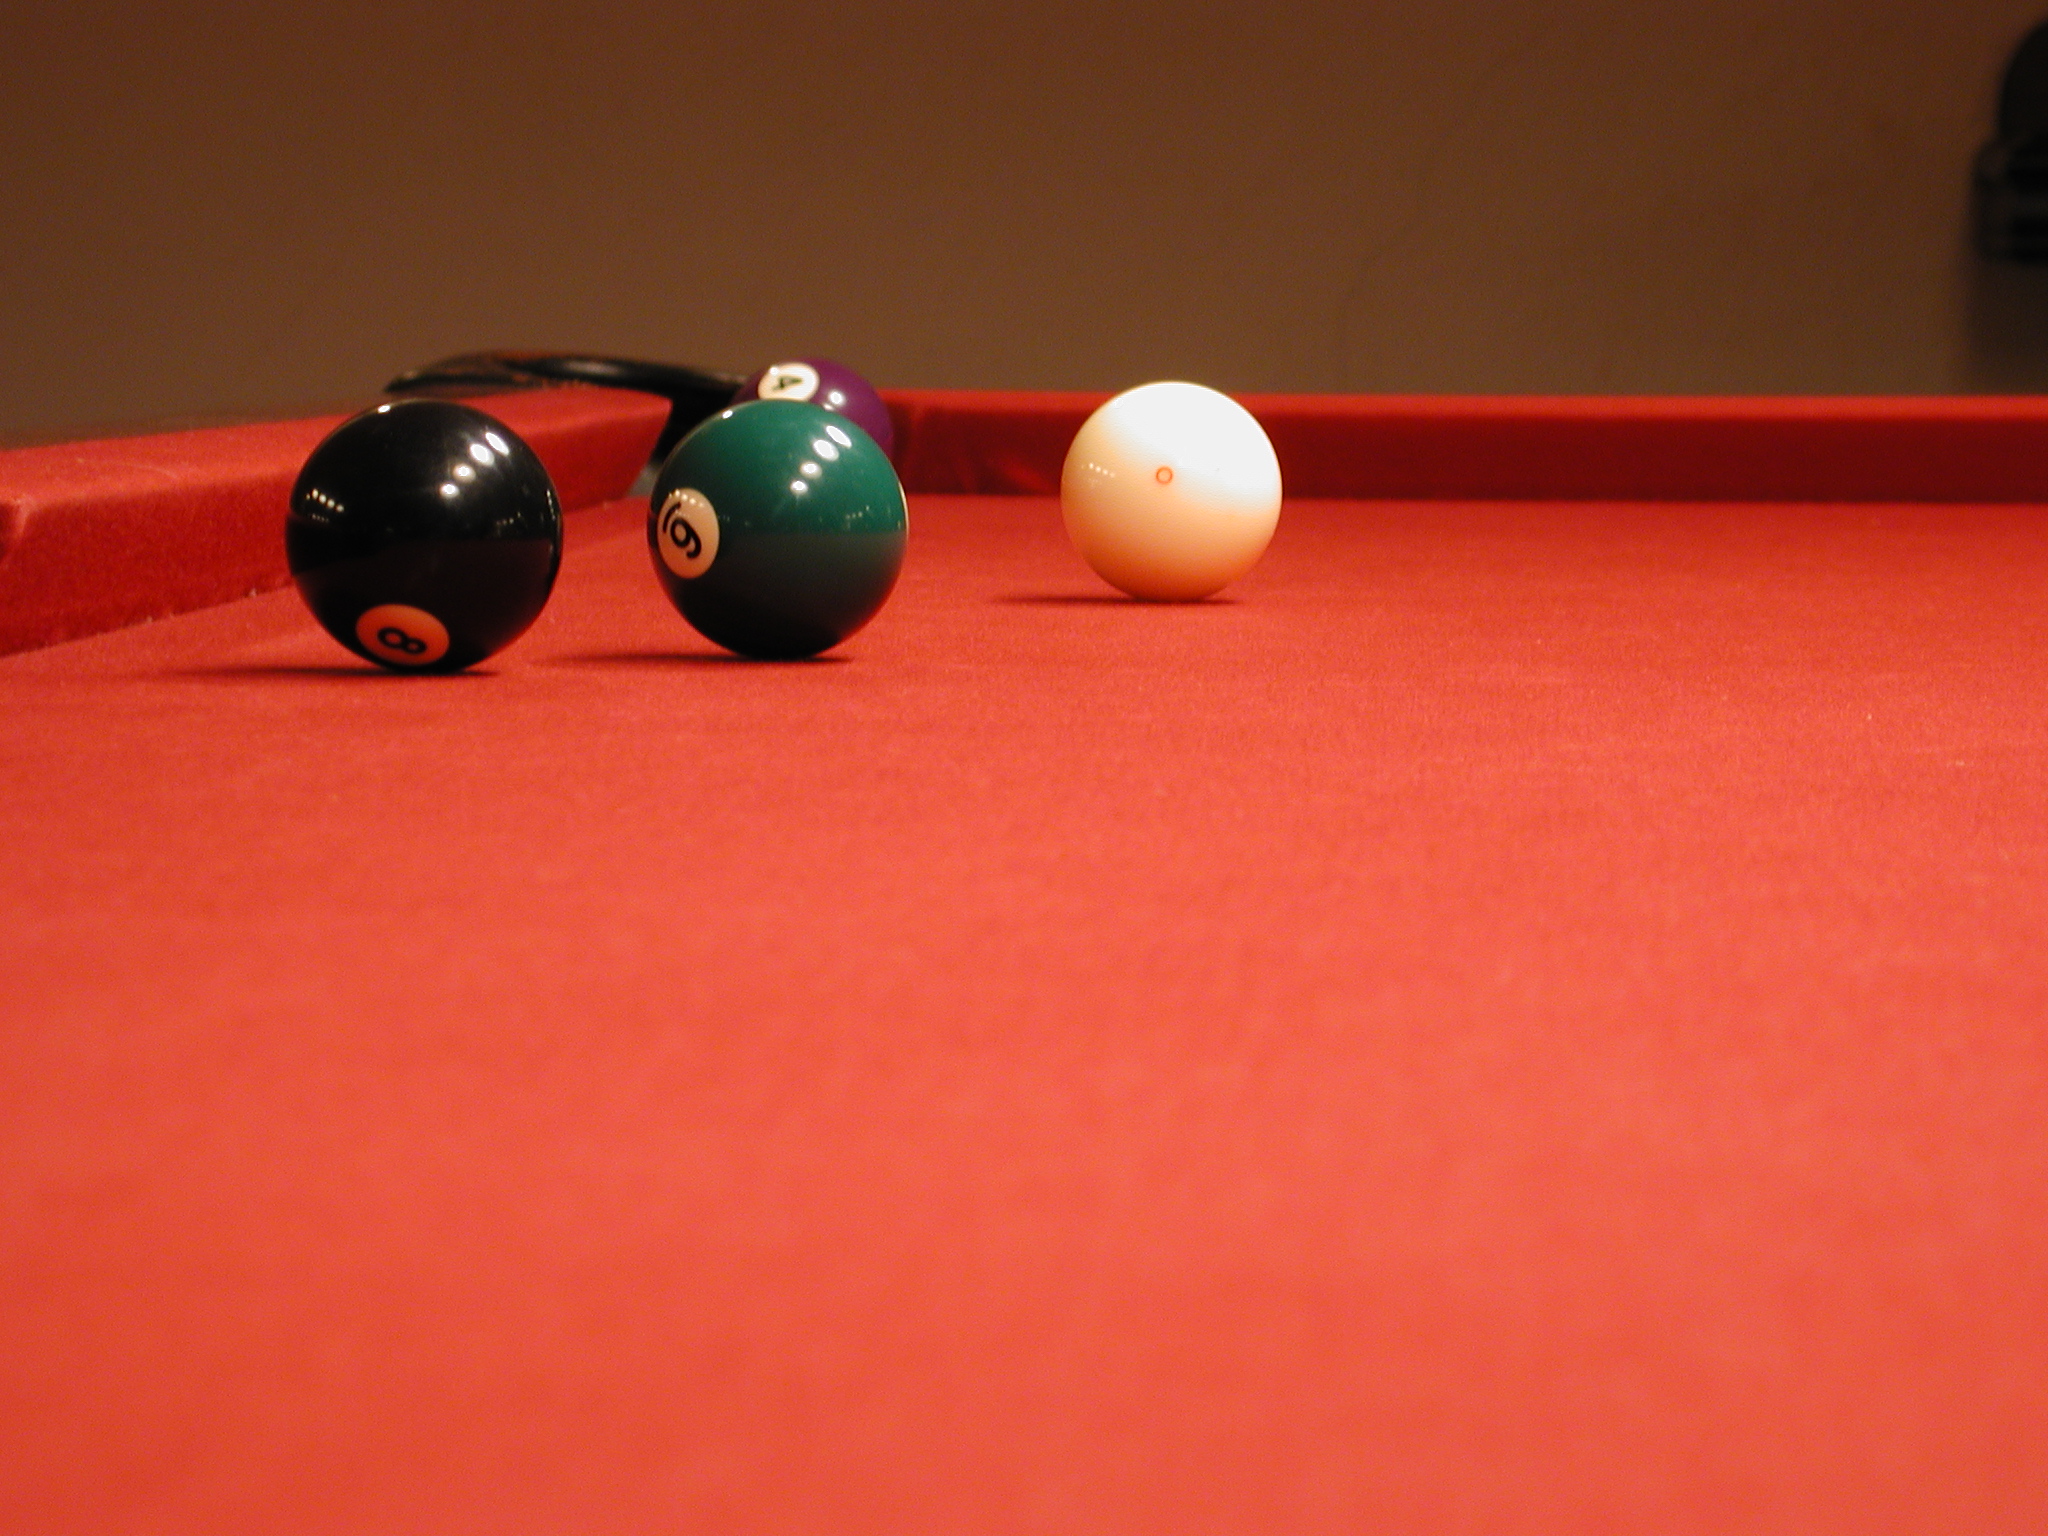 Billiards Table Wallpaper And Balls